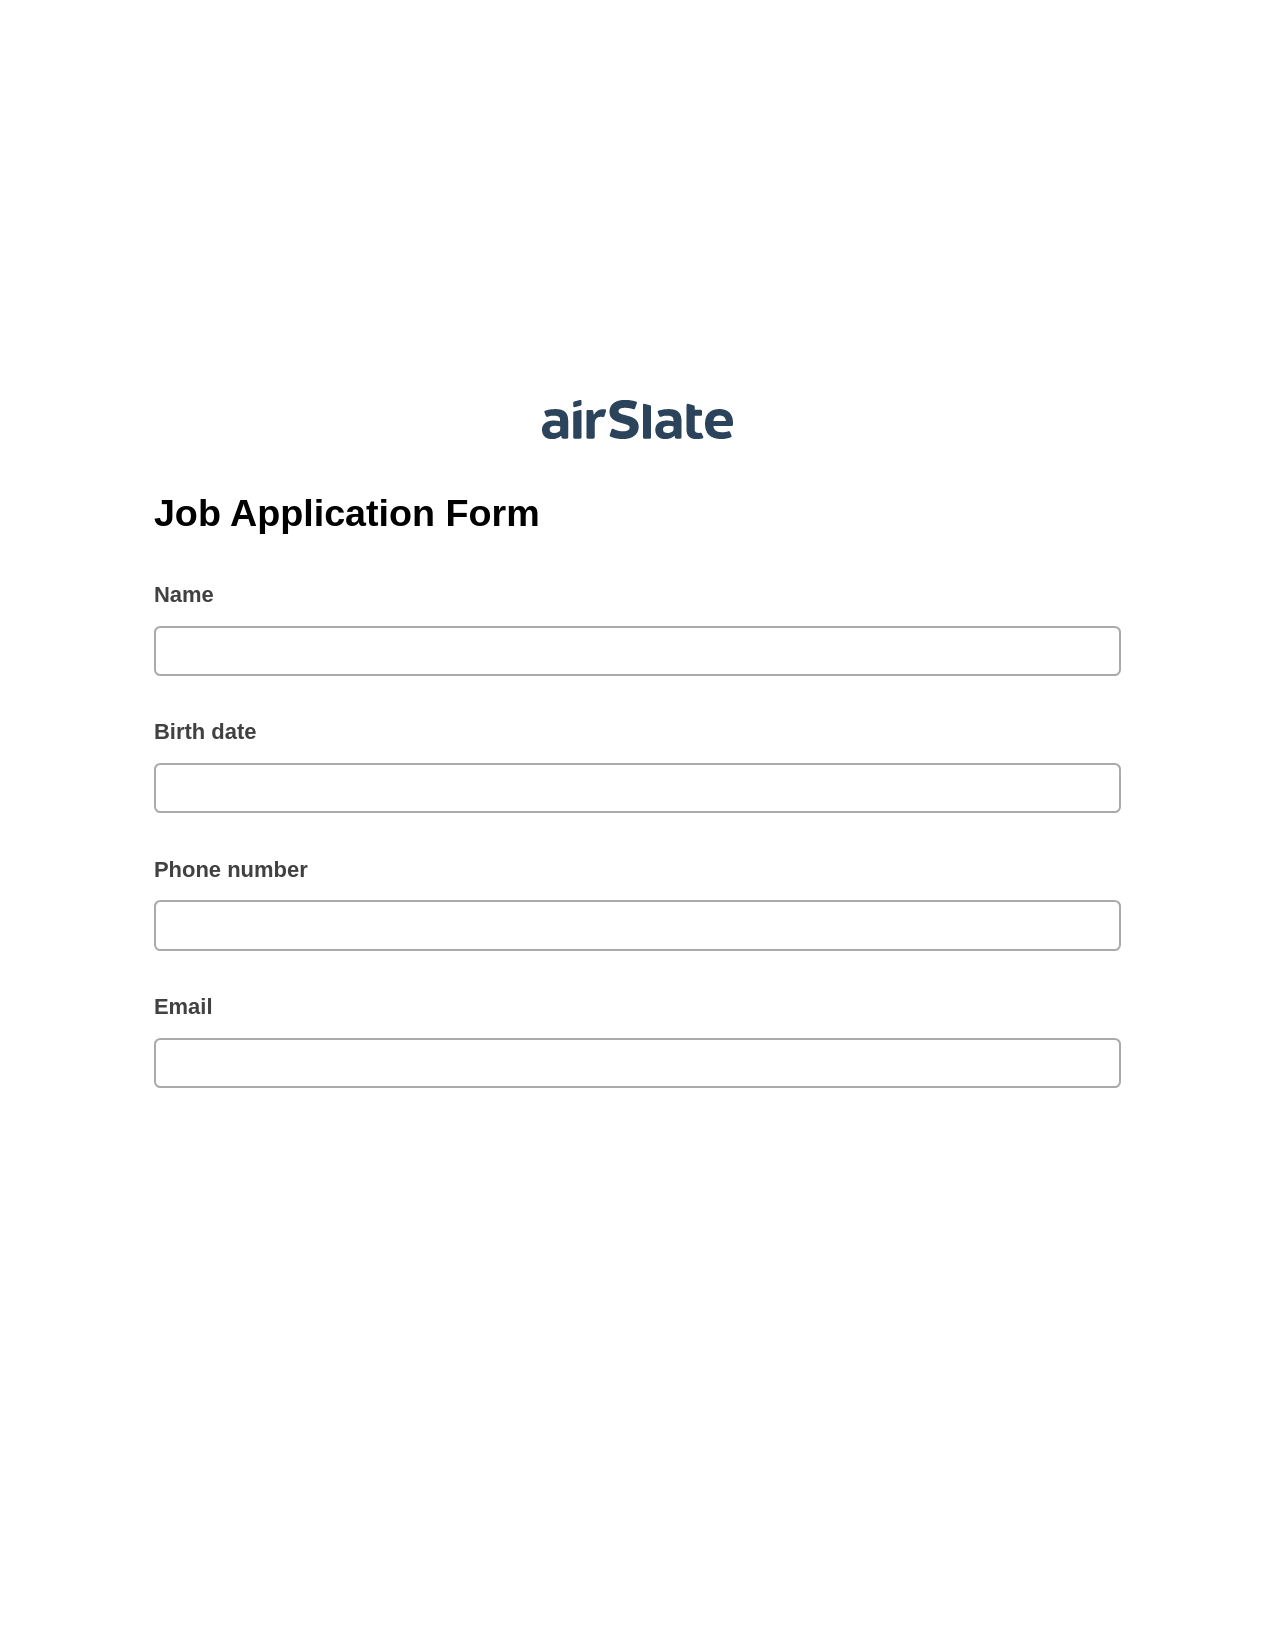 Multirole Job Application Form Pre-fill from CSV File Dropdown Options Bot, Webhook Bot, OneDrive Bot